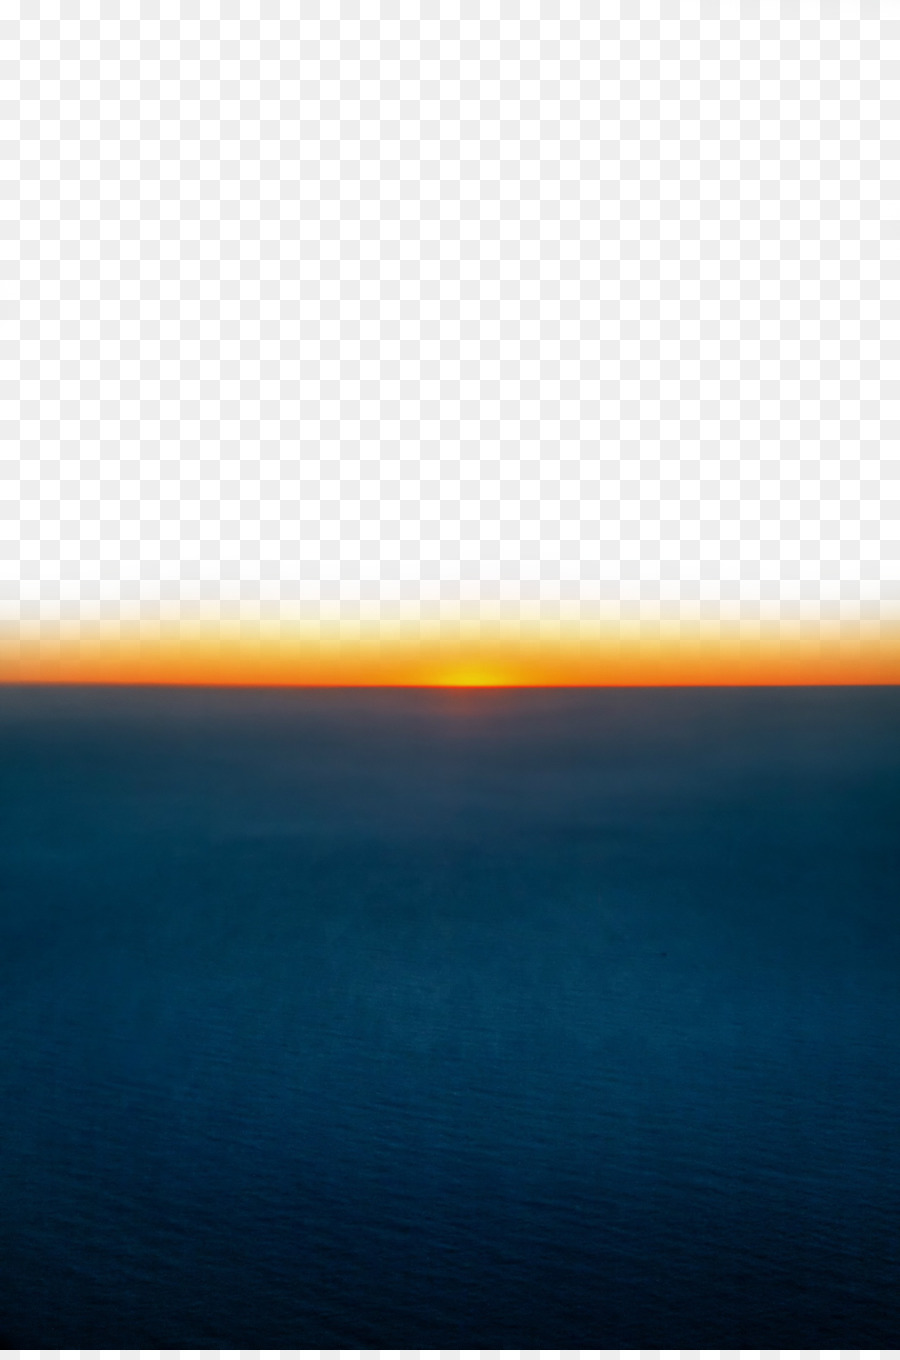 Sea Ocean Euclidean vector - Beautiful sea view png download - 1680*2520 - Free Transparent Sea png Download.